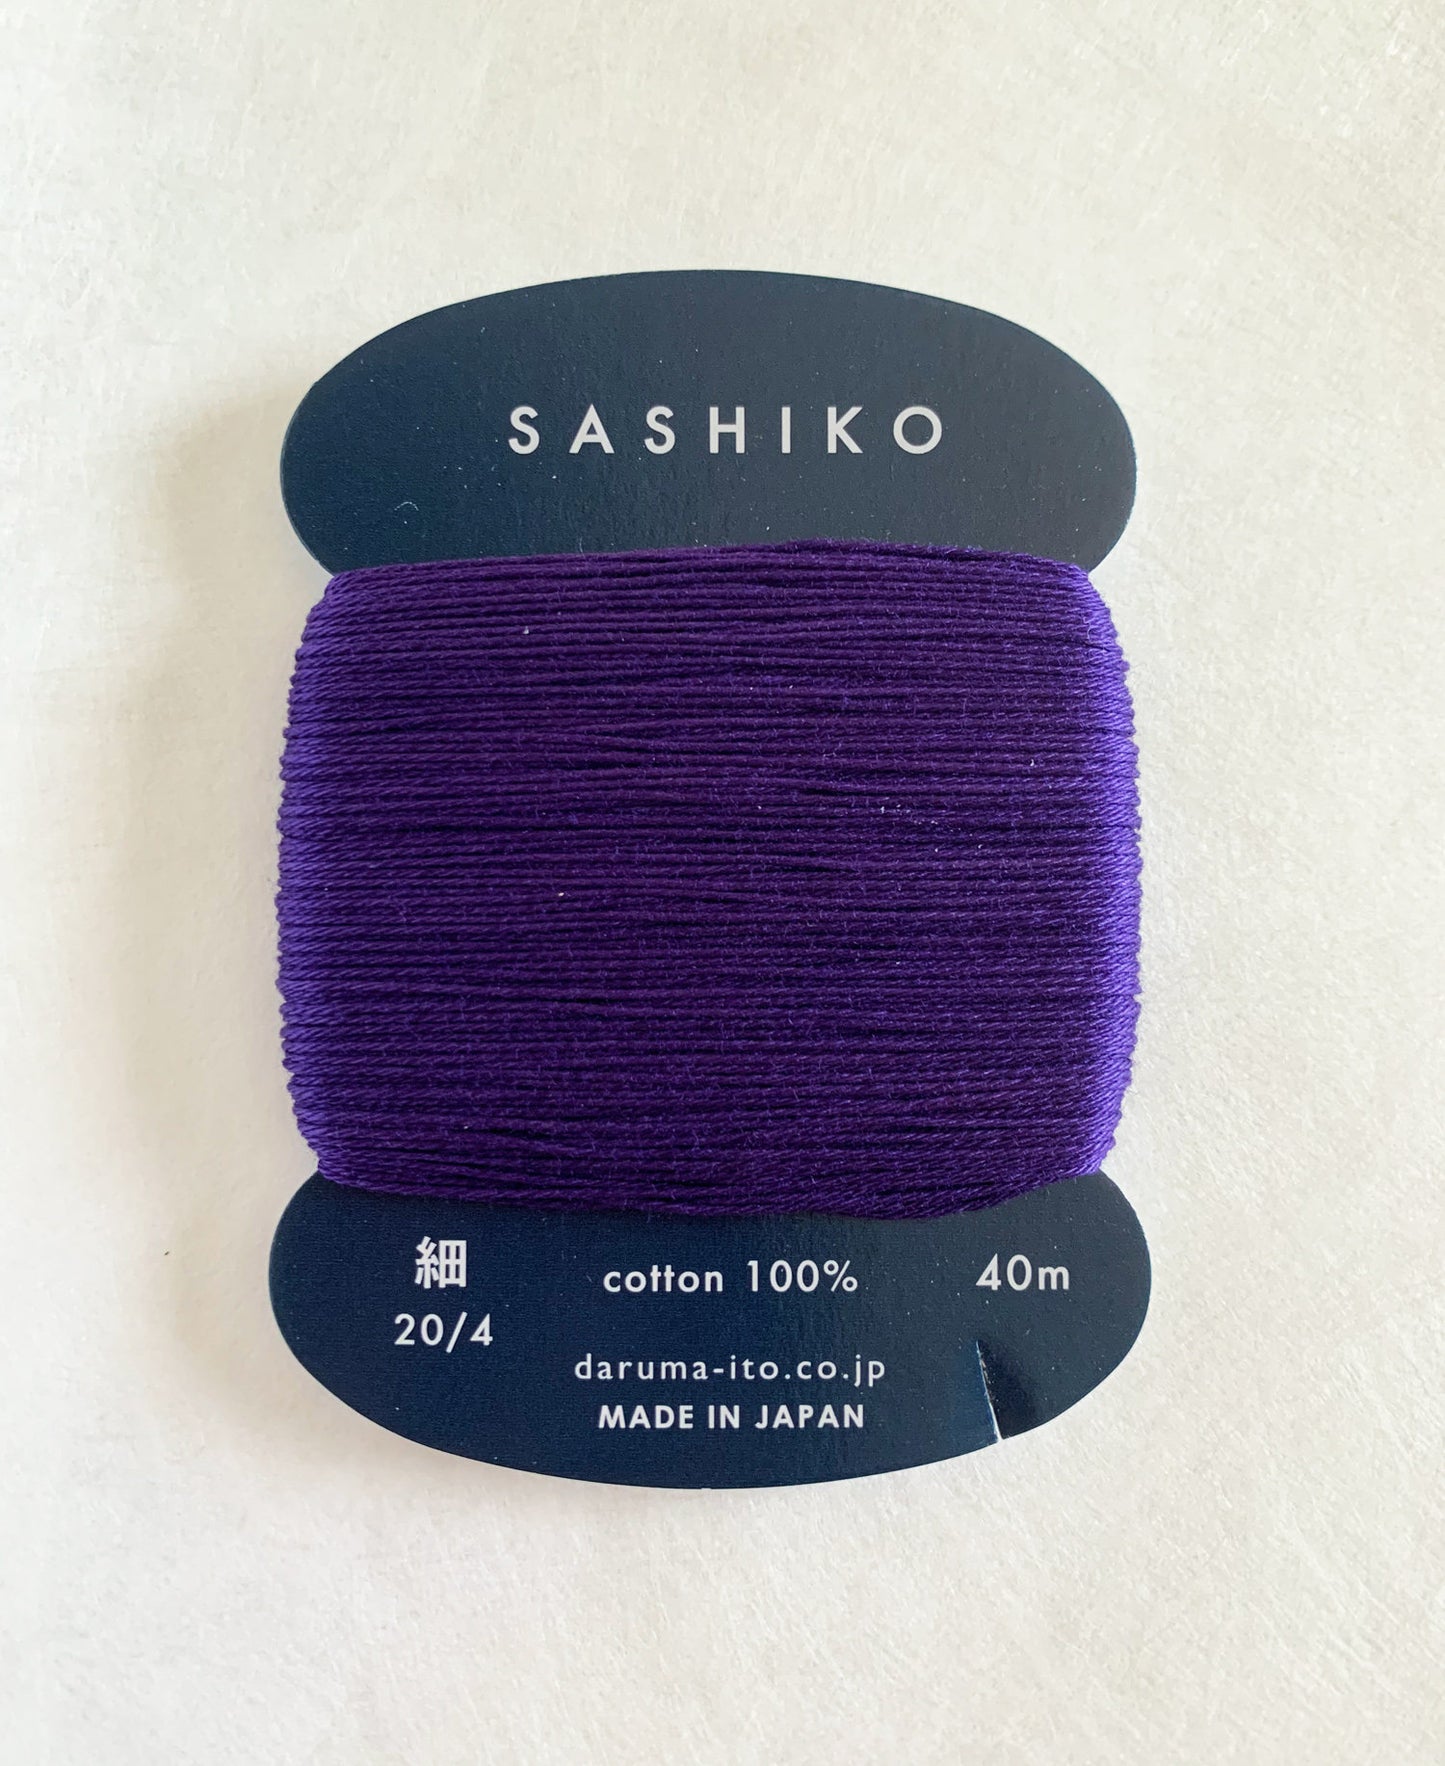 Daruma #223 GRAPE Japanese Cotton SASHIKO thread 40 meter skein 20/4 ぶどう grape purple